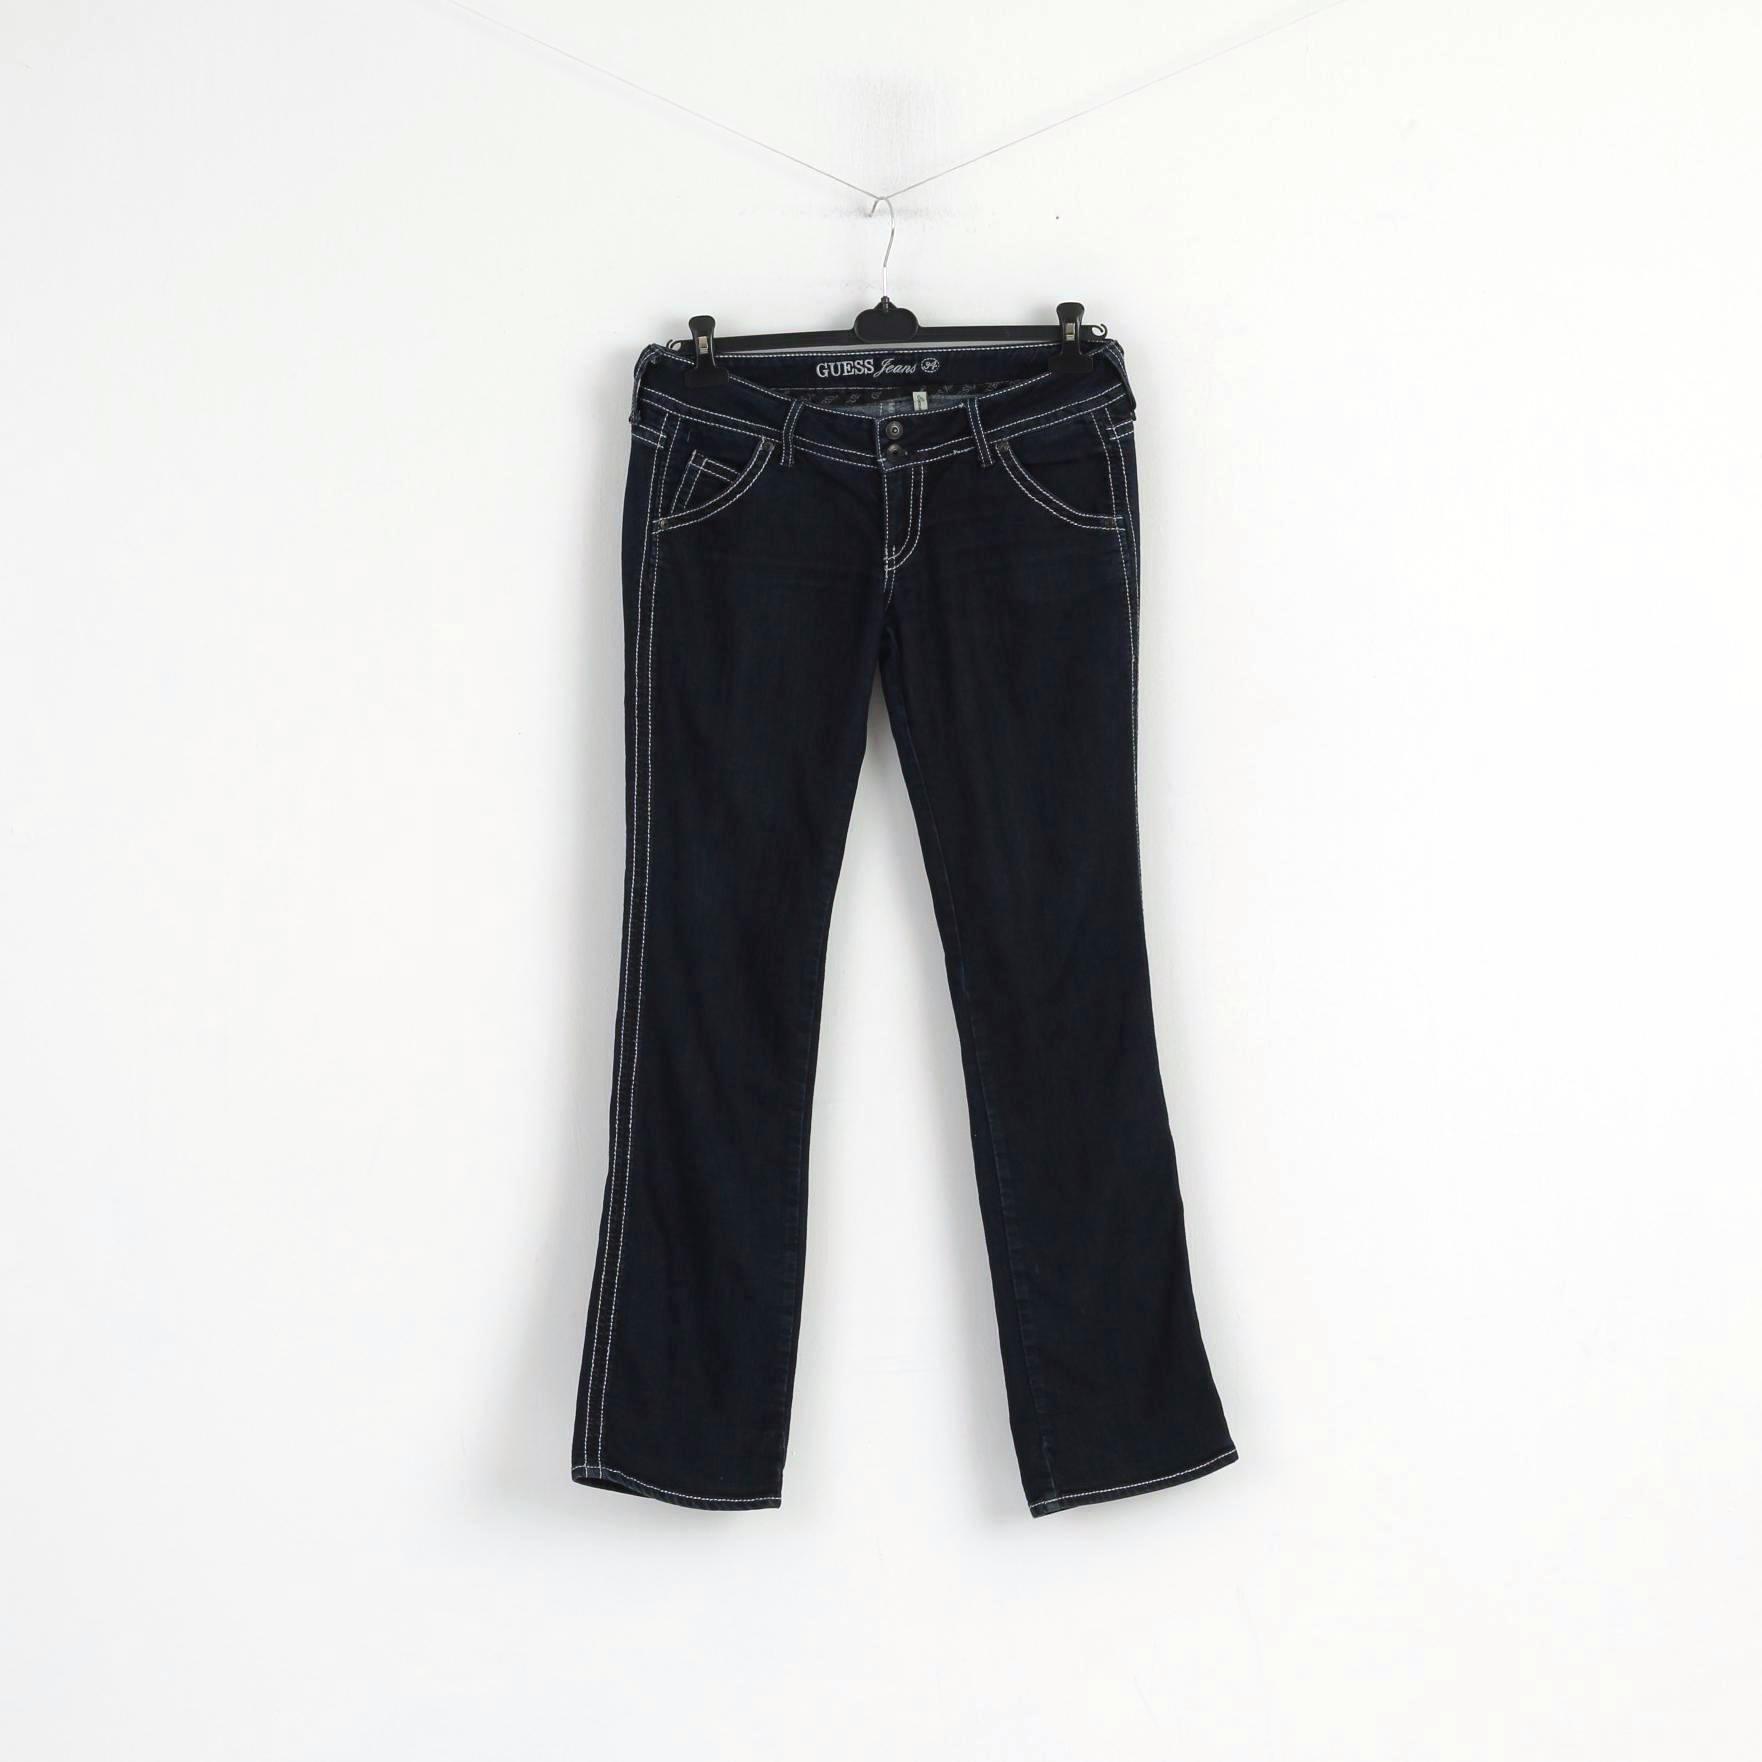 Jeans Women 34 Jeans Trousers Navy Regular Straight RetrospectClothes